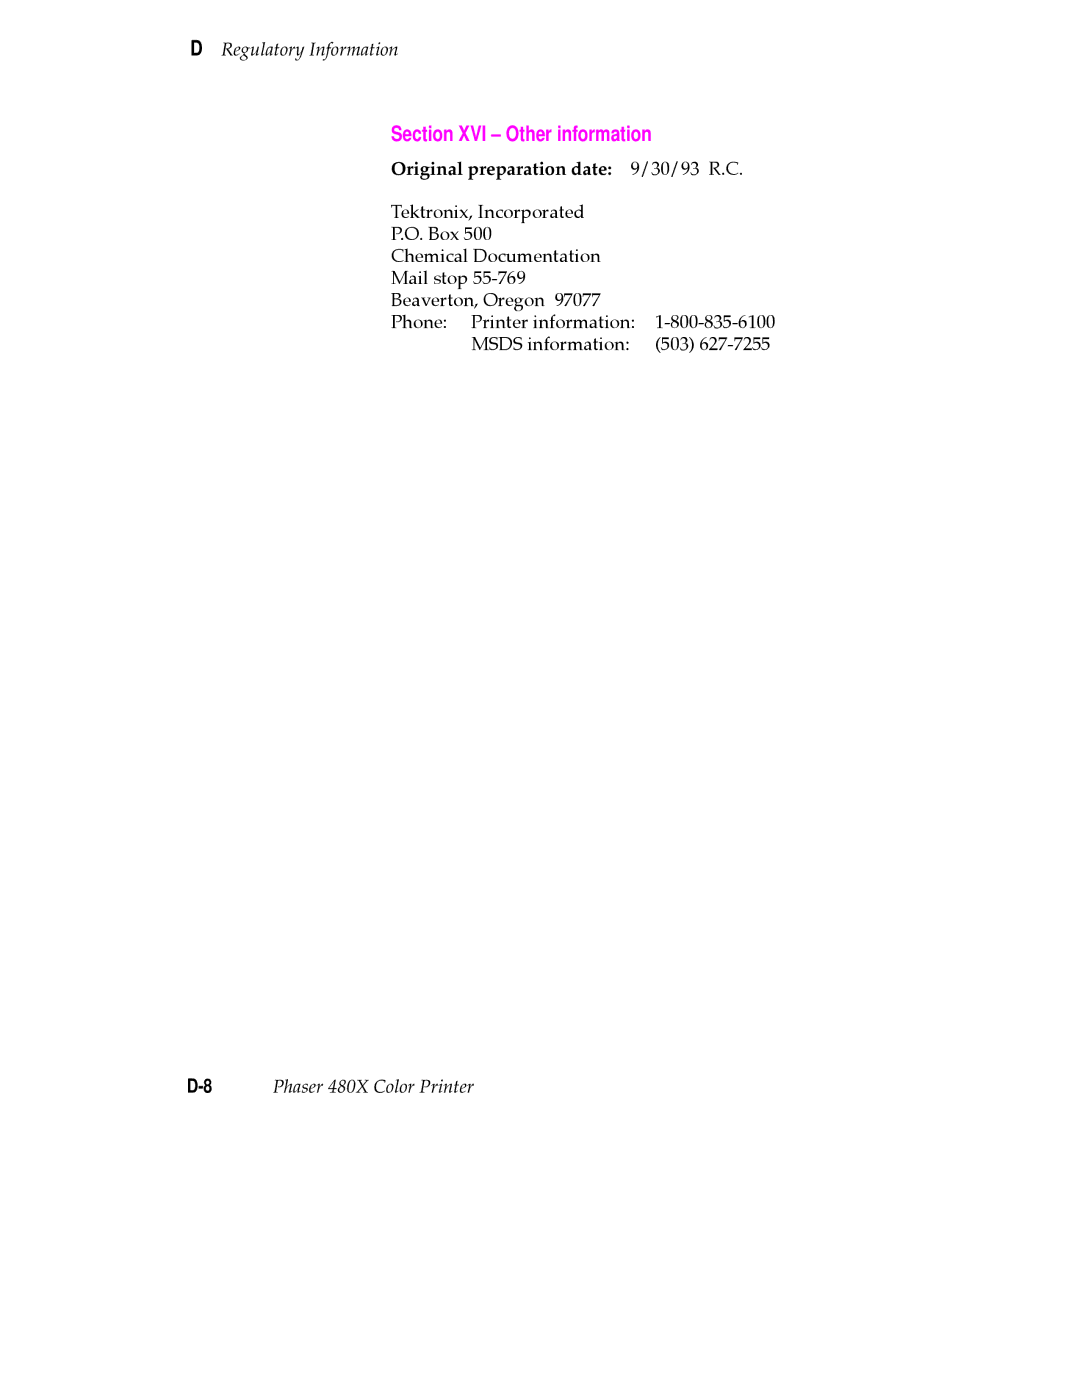 Tektronix 480X user manual Section XVI Other information, Original preparation date 9/30/93 R.C 